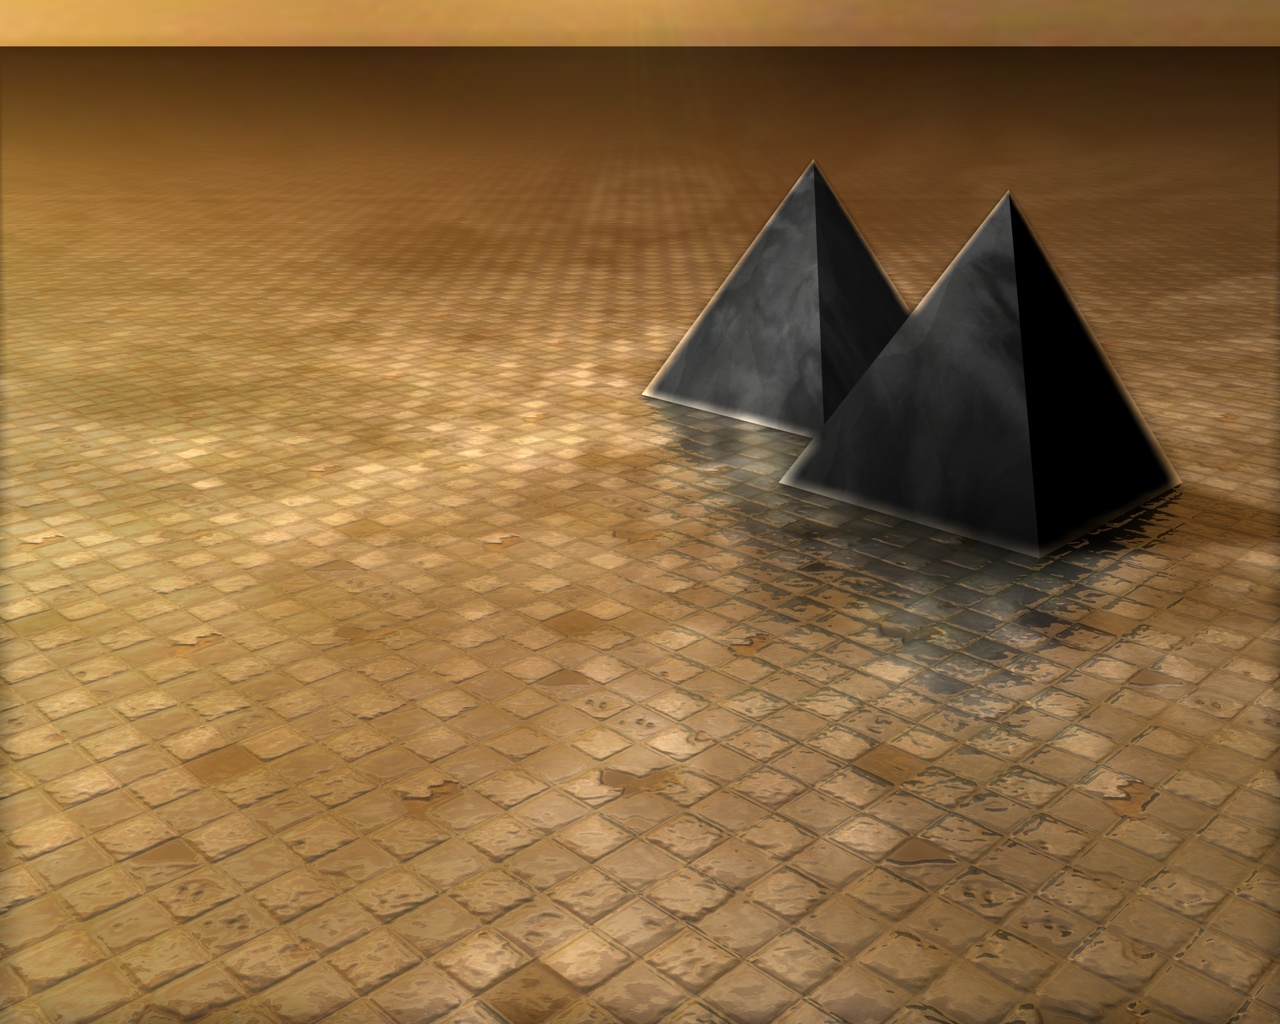 artistic, pyramid